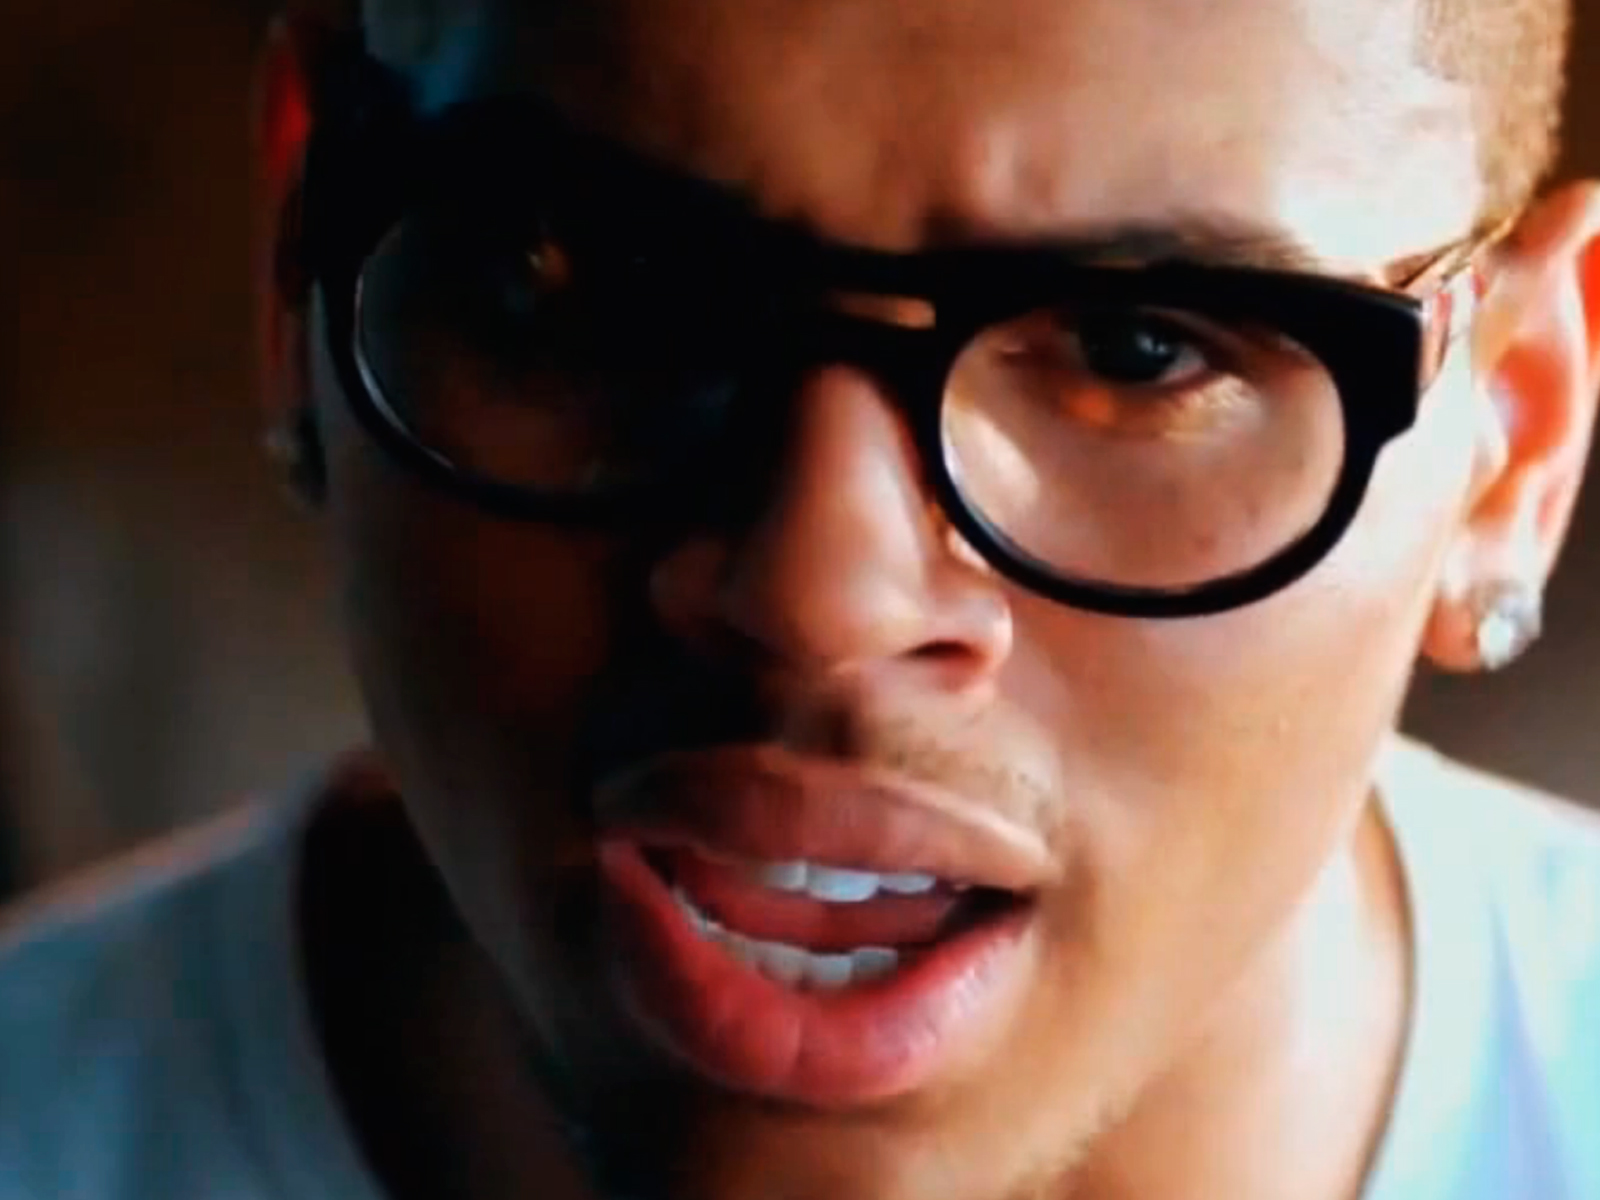 Chris Brown - Crawl Watch YouTube Music Videos